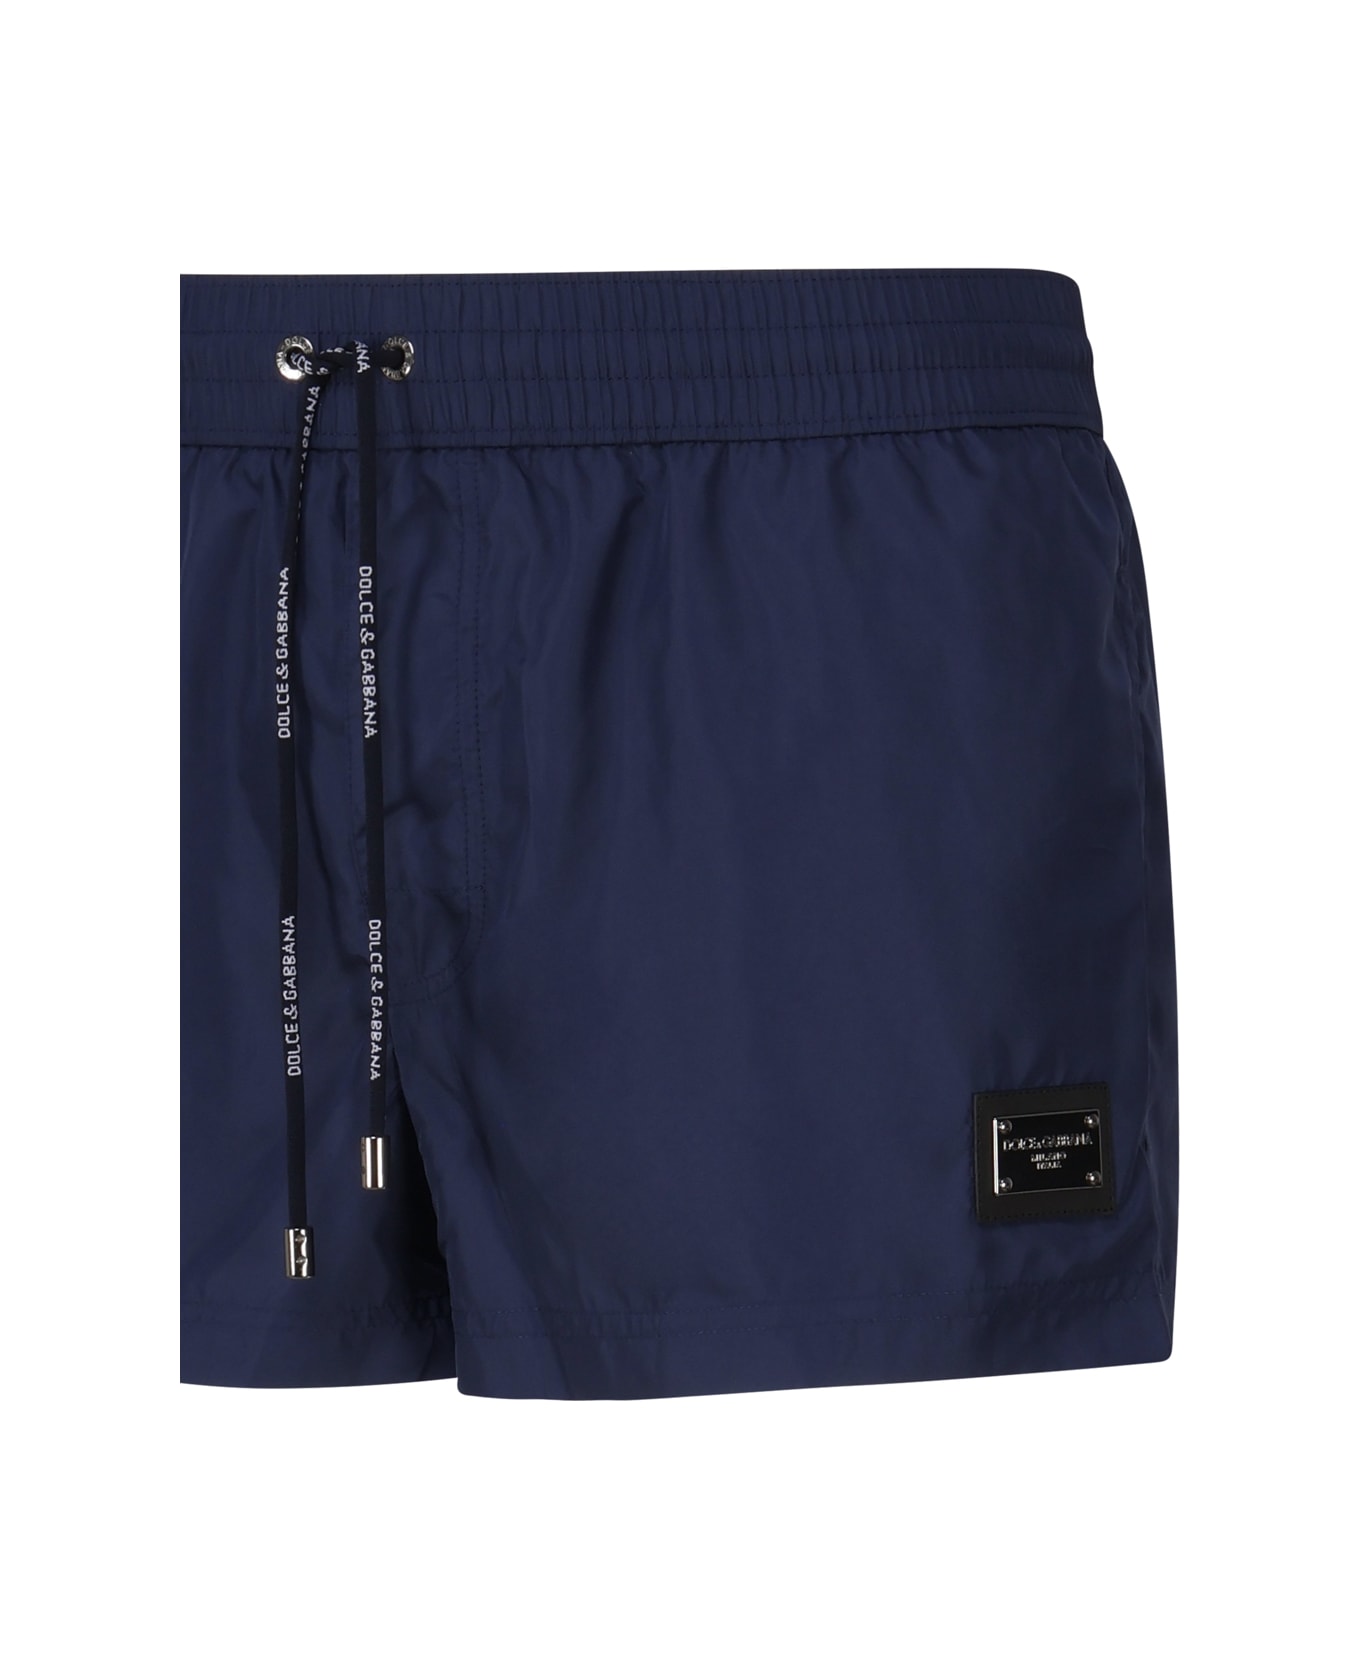 Dolce & Gabbana Short Beach Boxer Shorts Made Of Lightweight Nylon With Metal Logo Plaque - Blue